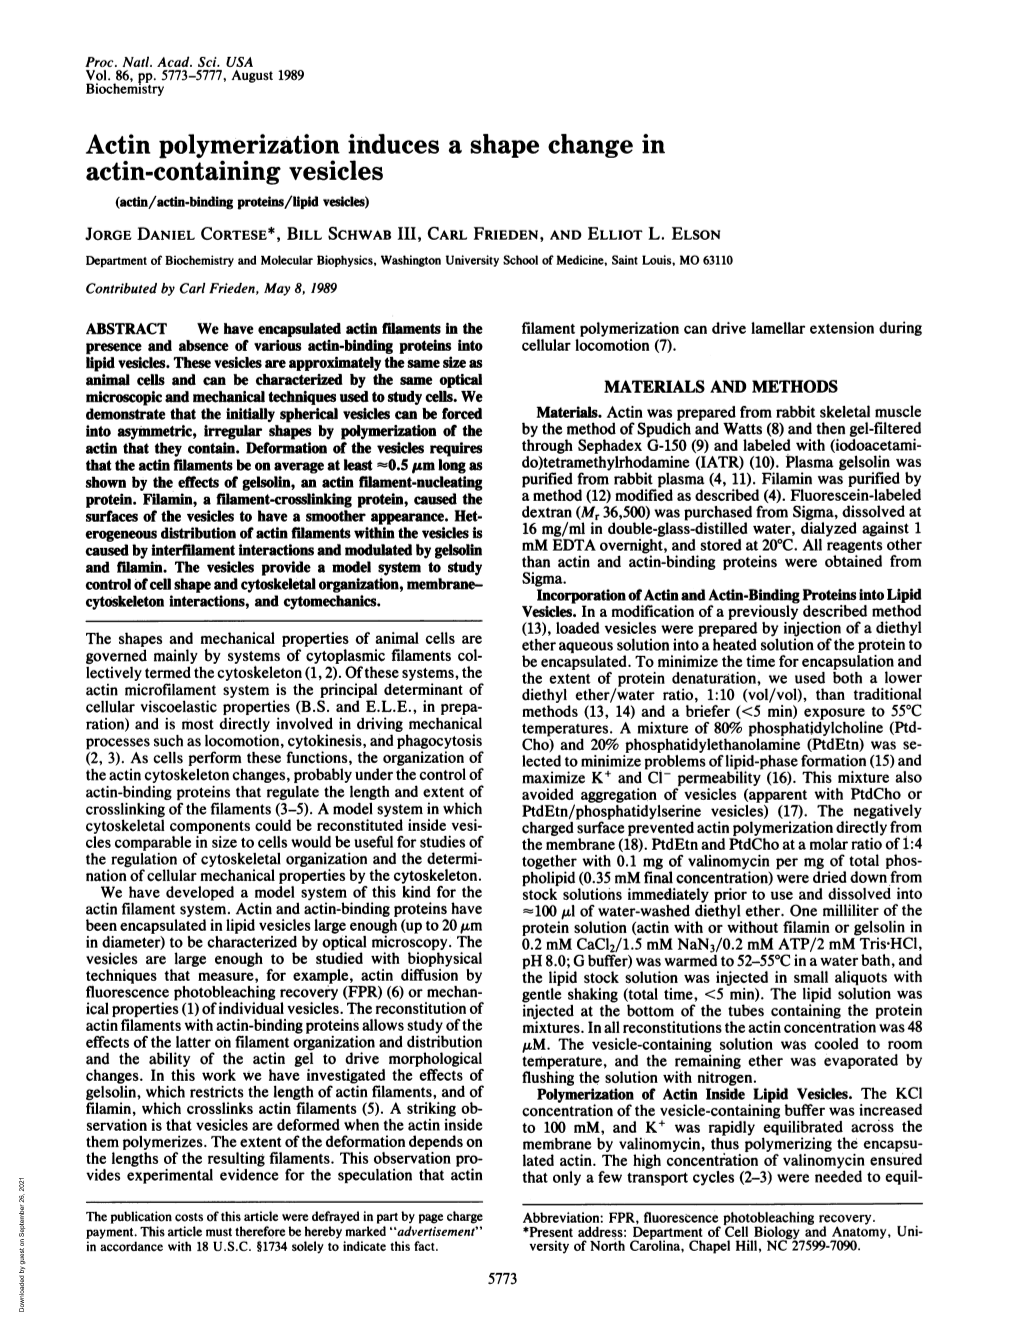 Actin-Containing Vesicles (Actin/Actin-Binding Proteins/Lipid Vesicles) JORGE DANIEL CORTESE*, BILL SCHWAB III, CARL FRIEDEN, and ELLIOT L